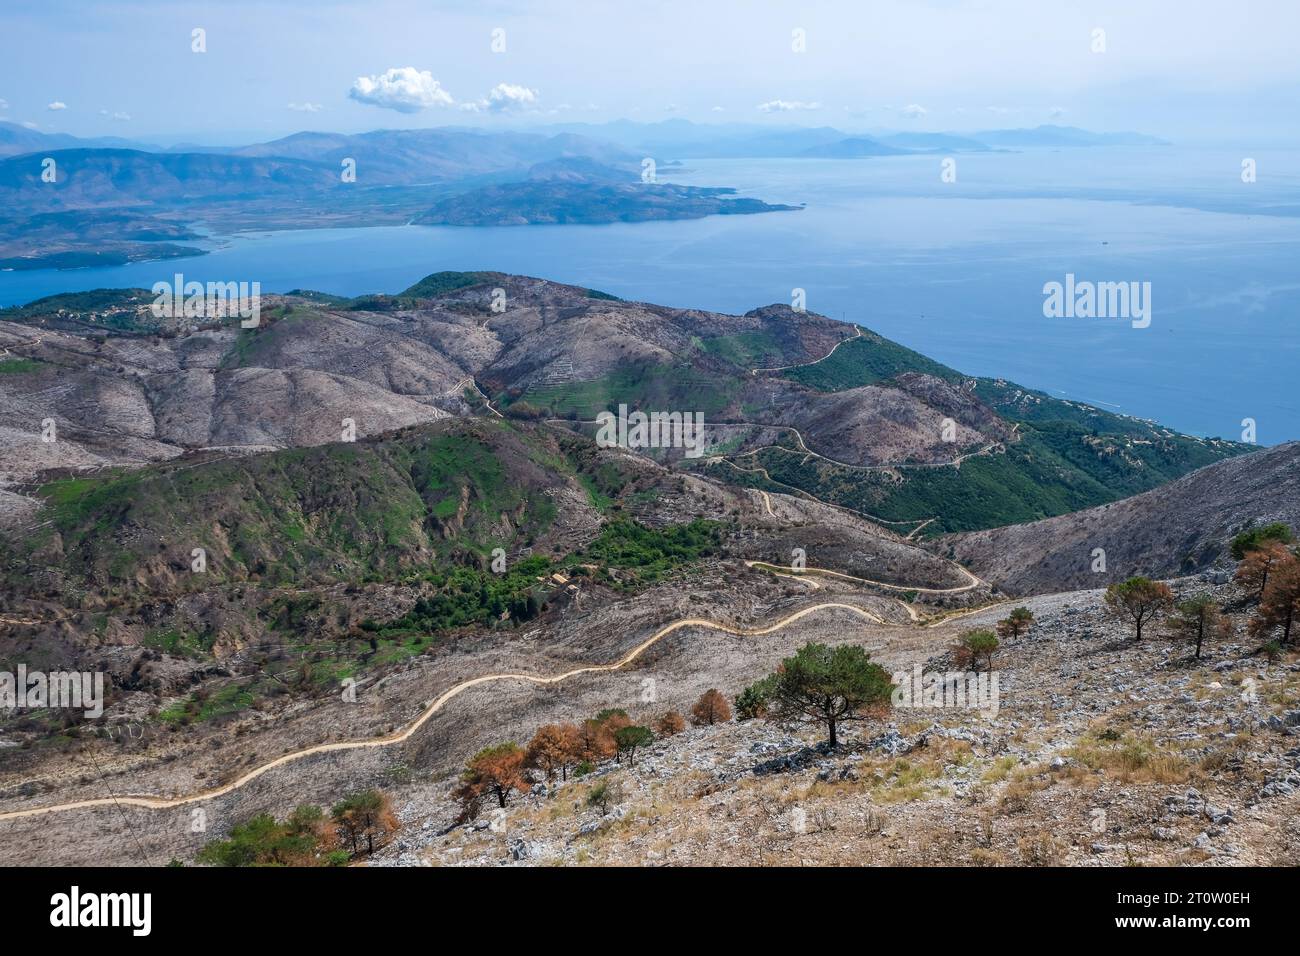 Pantokrator, Corfu, Greece - Mount Pantokrator with view over barren mountain landscape and the Ionian Sea towards mainland Albania. The Pantokrator i Stock Photo